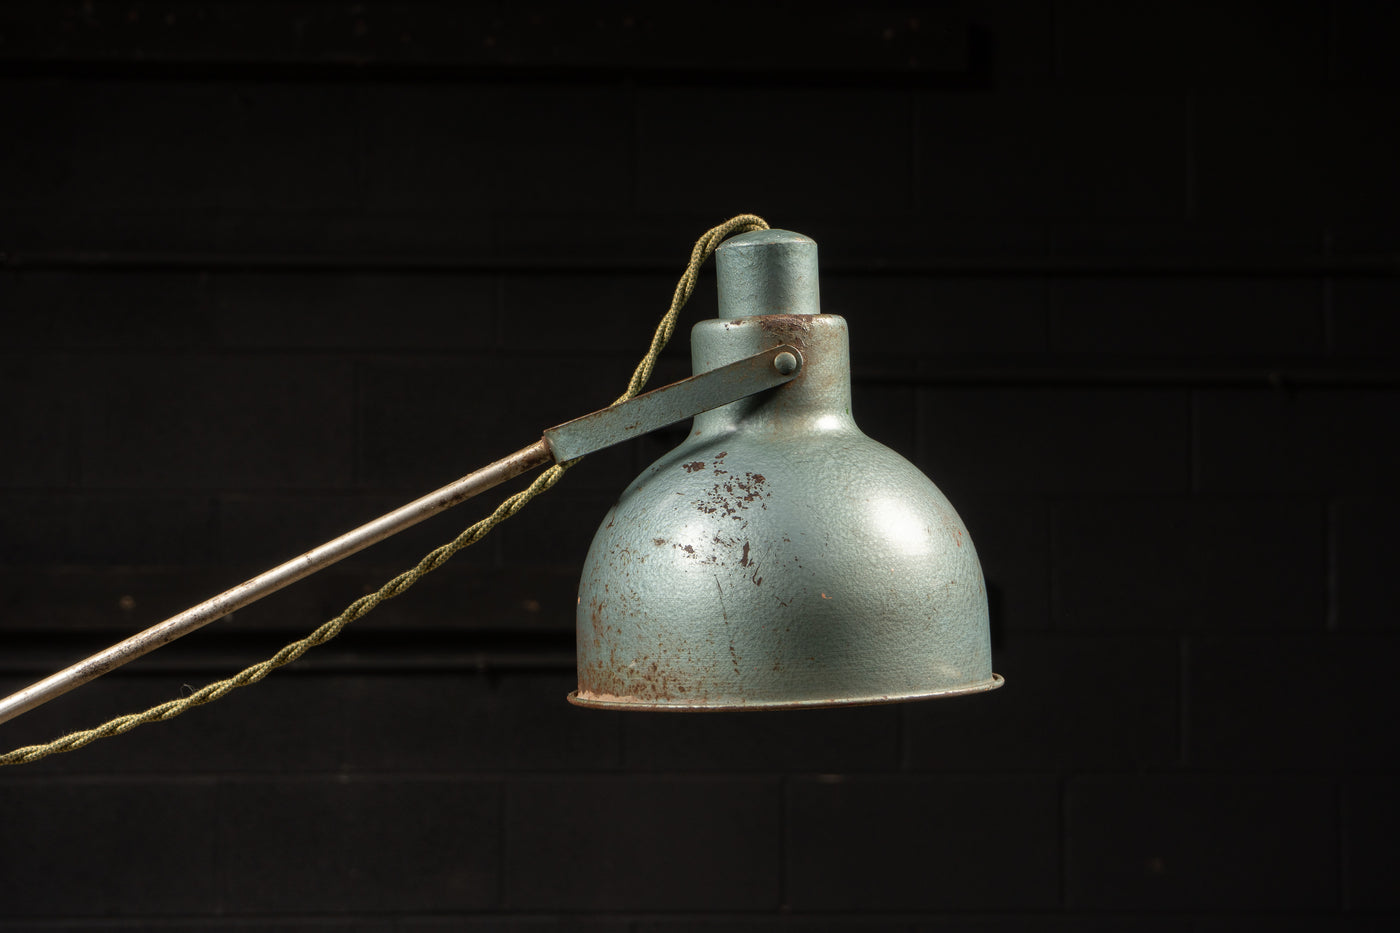 c. 1950 Articulated Lamp by Bretford Mfg.